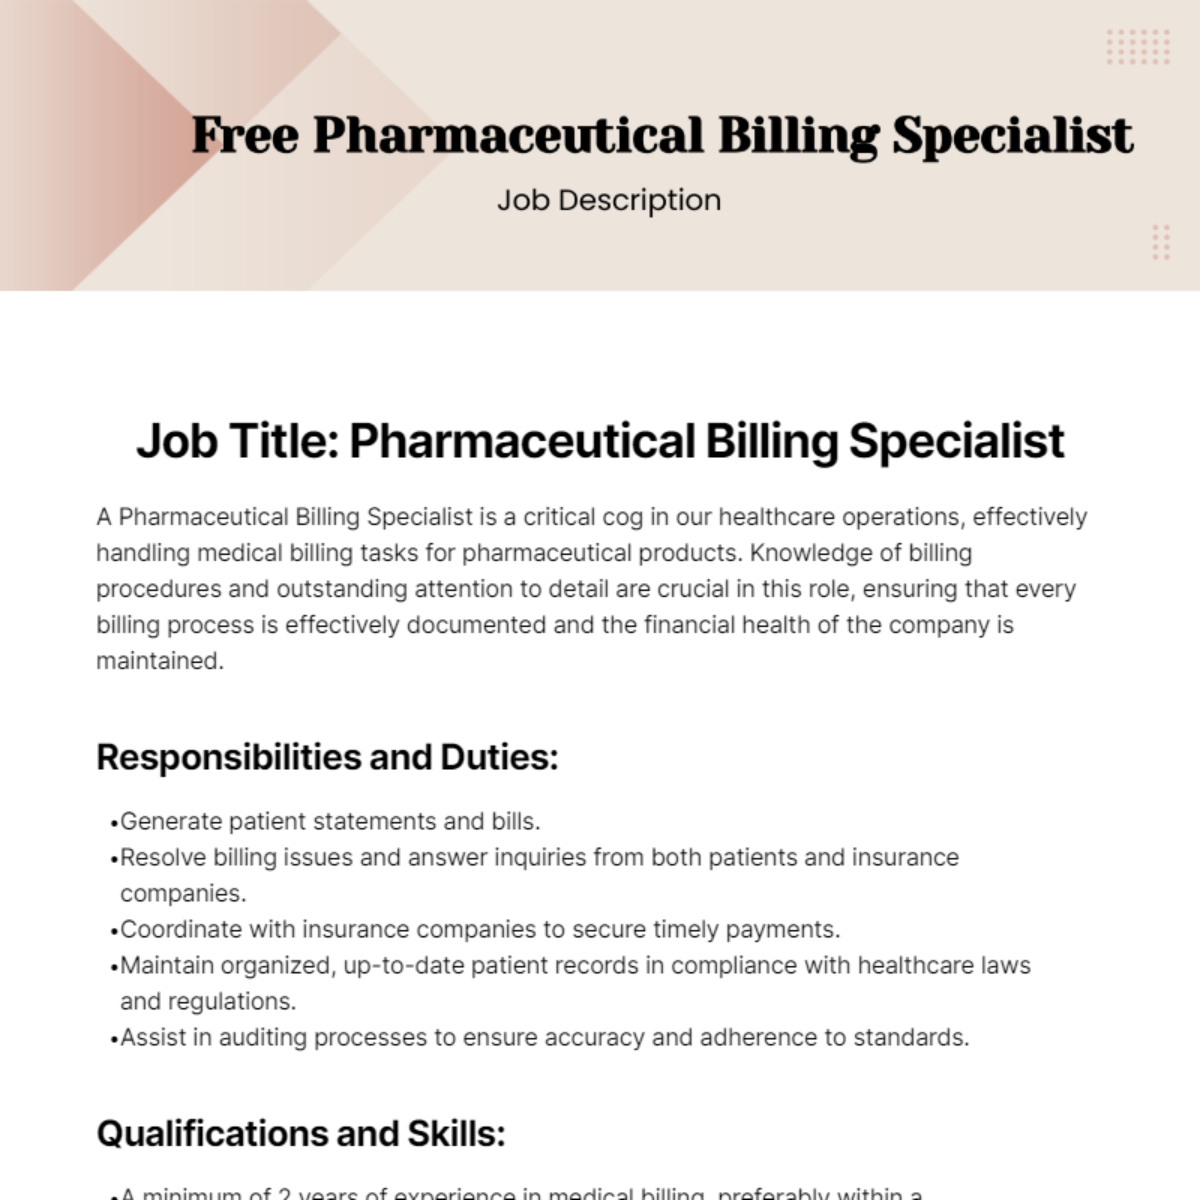 Free Pharmaceutical Billing Job Description Template